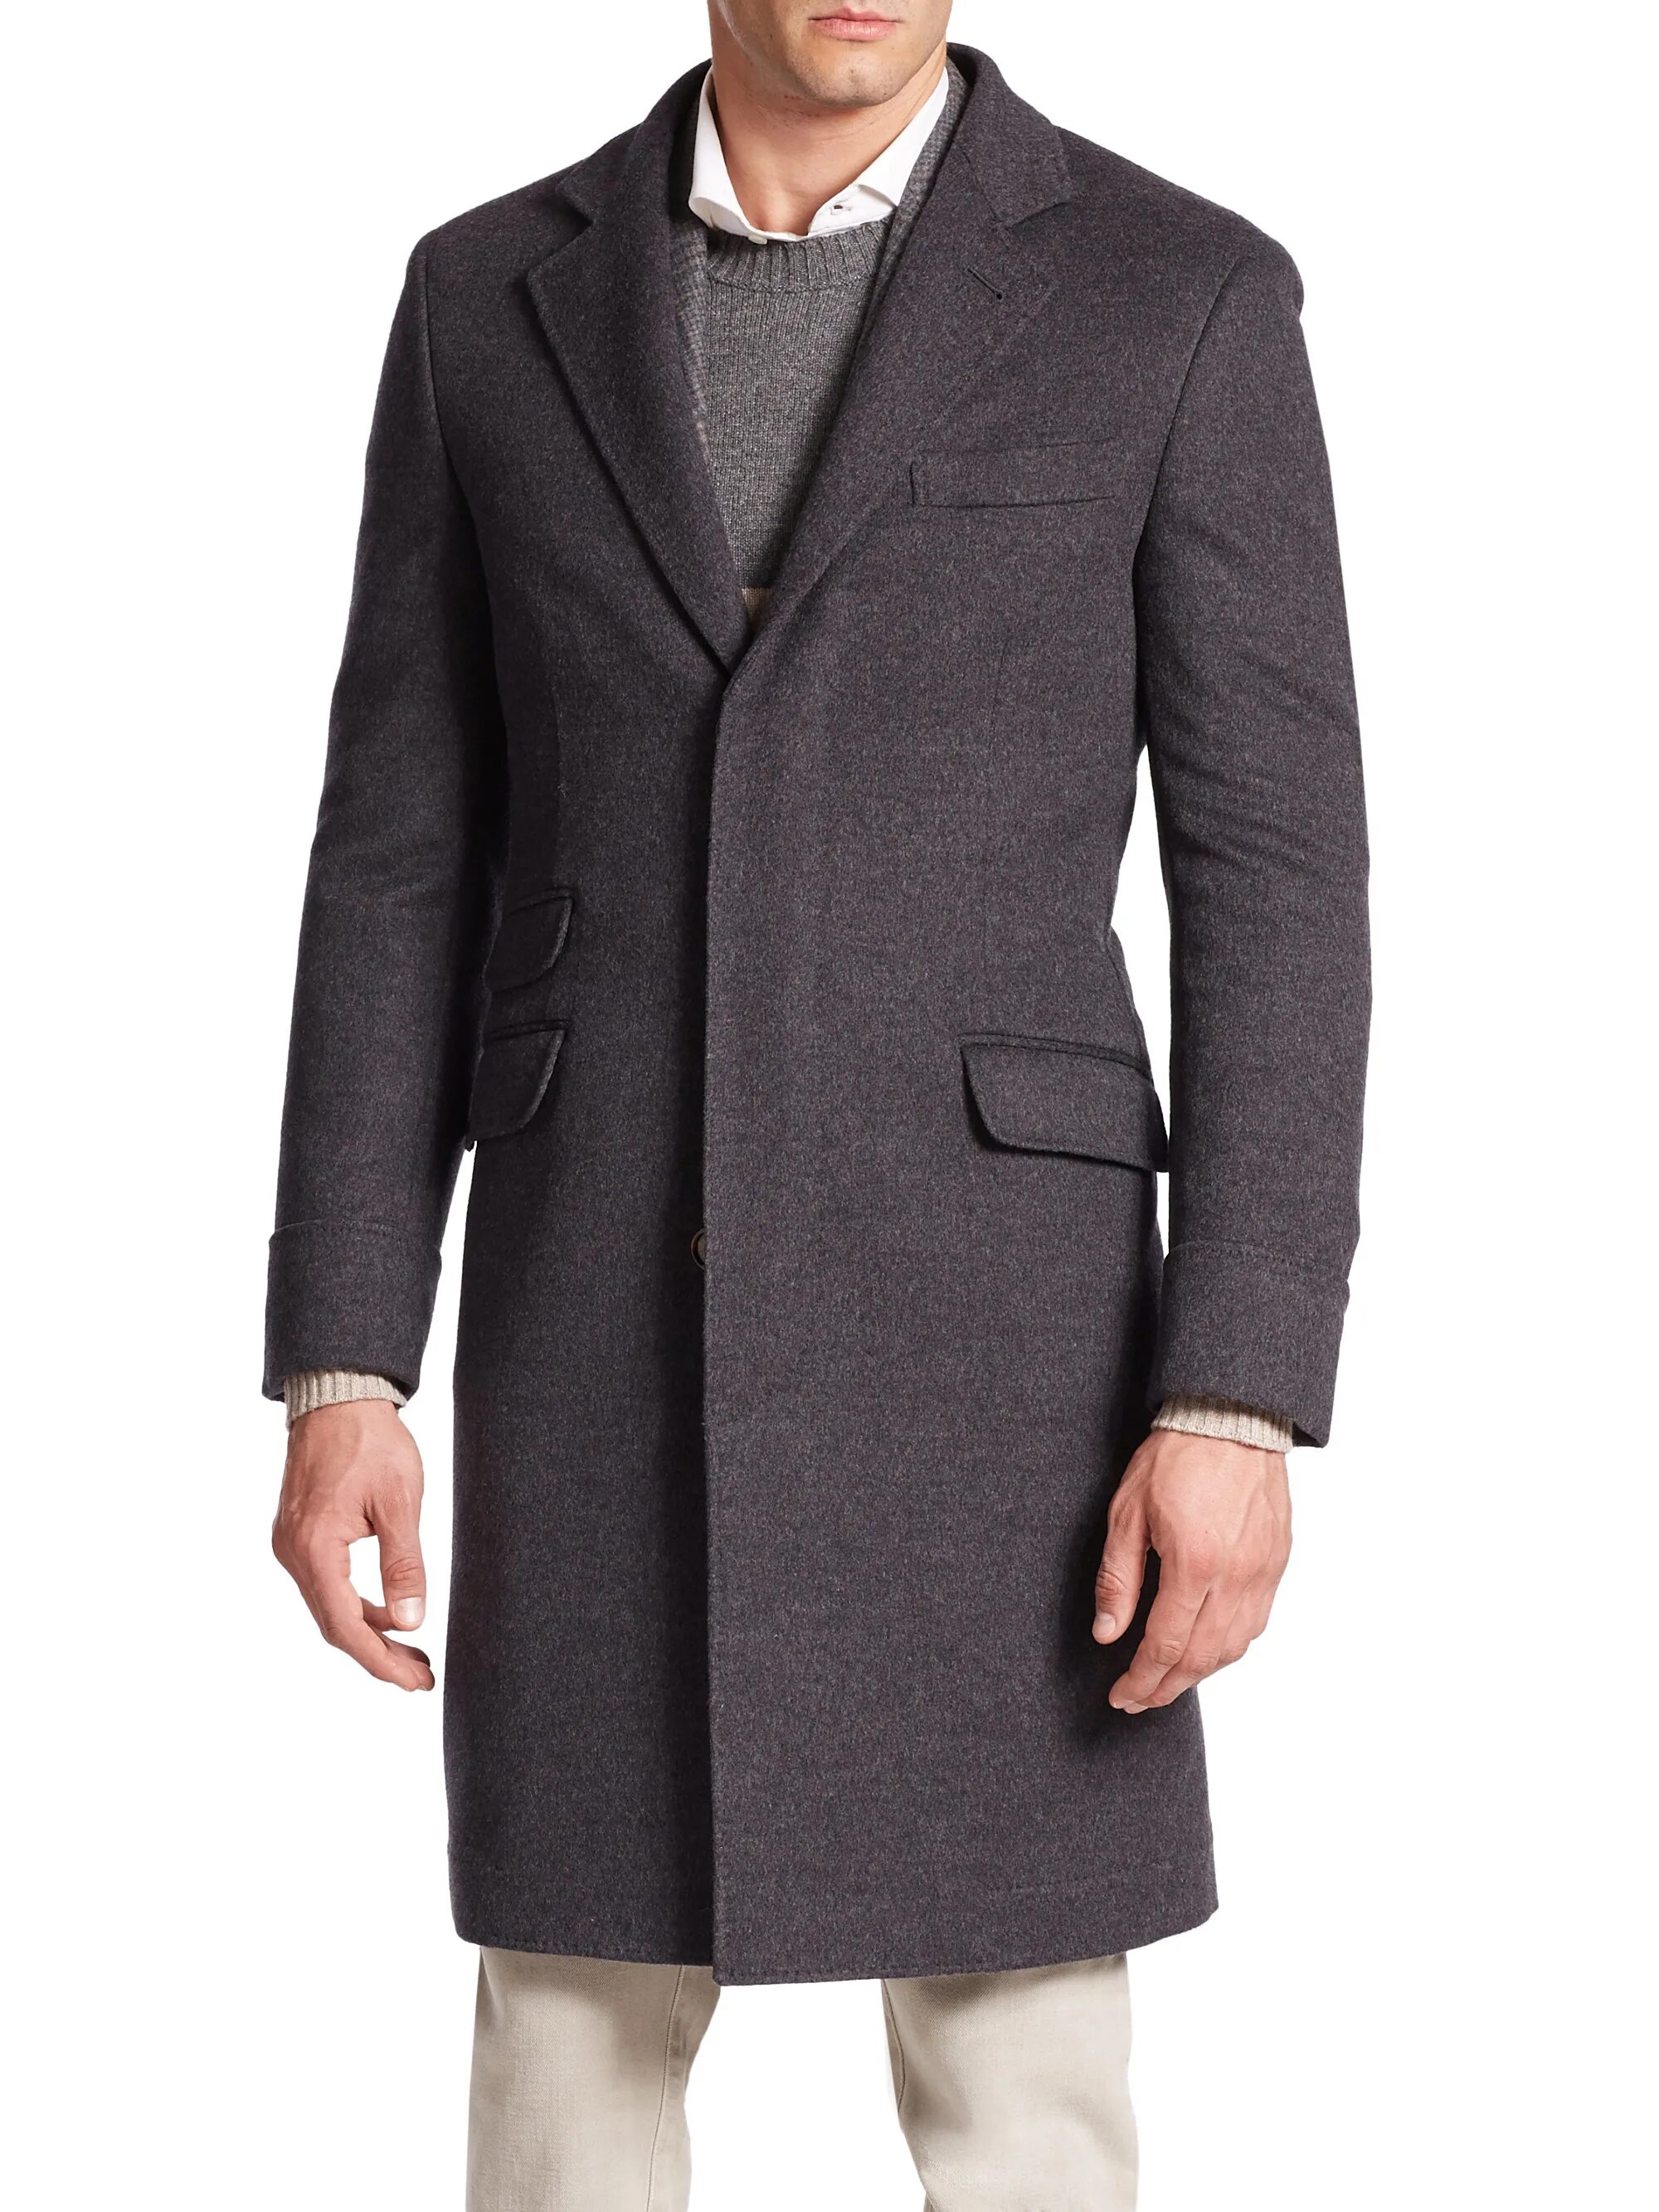 Мужской кашемир. Brunello Cucinelli Coat. Brunello Cucinelli Jacket Grey Wool. Crombie пальто мужское. Brunello Cucinelli пальто мужское.